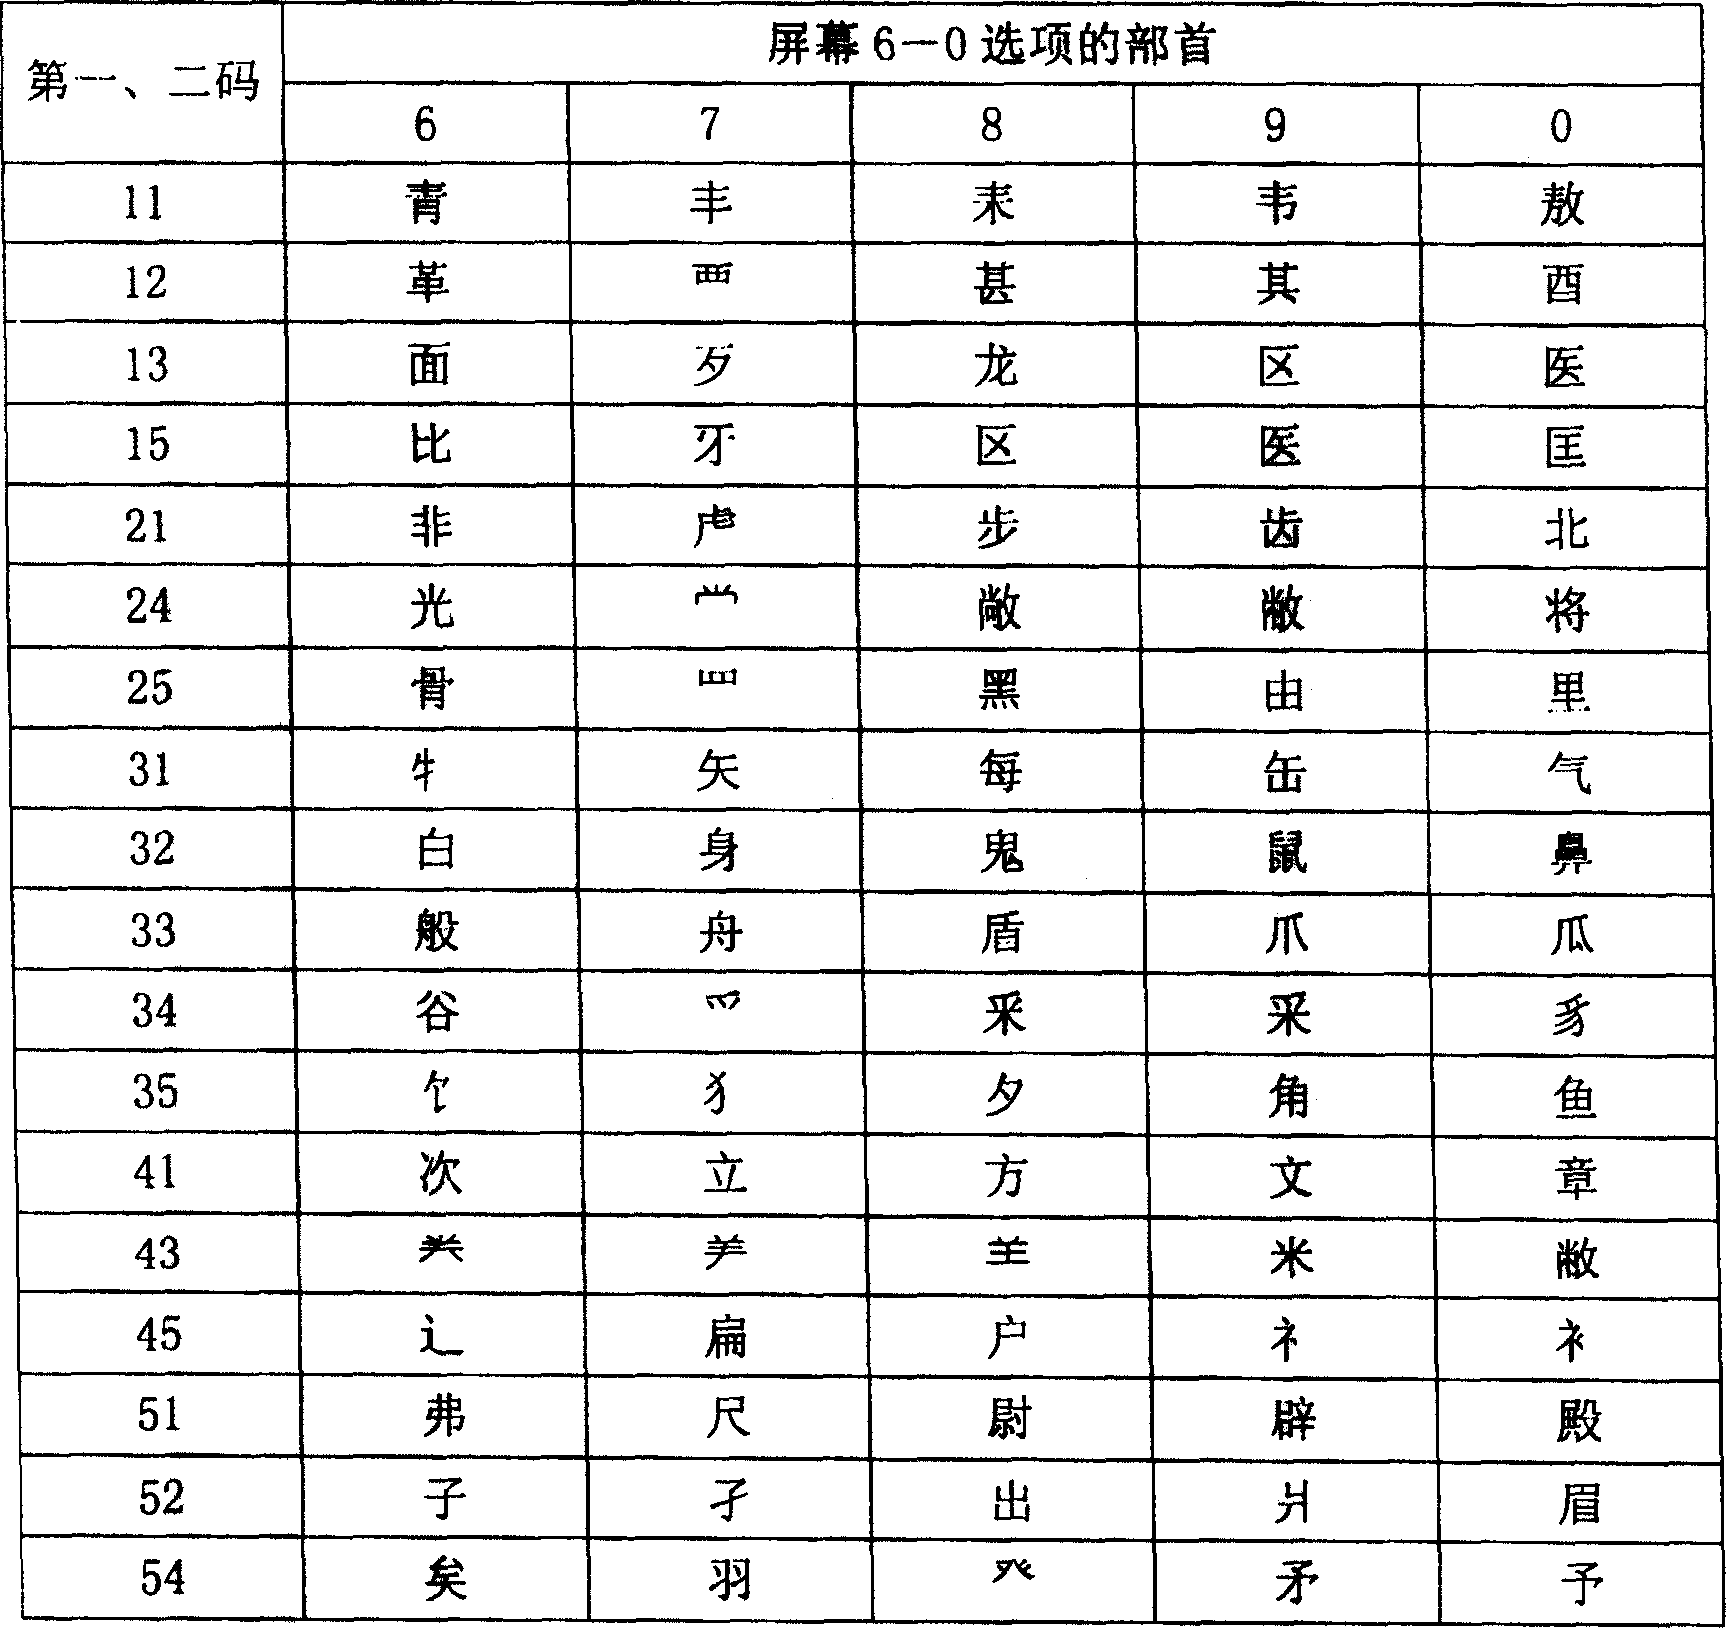 Chinese character input method using digital keyboard